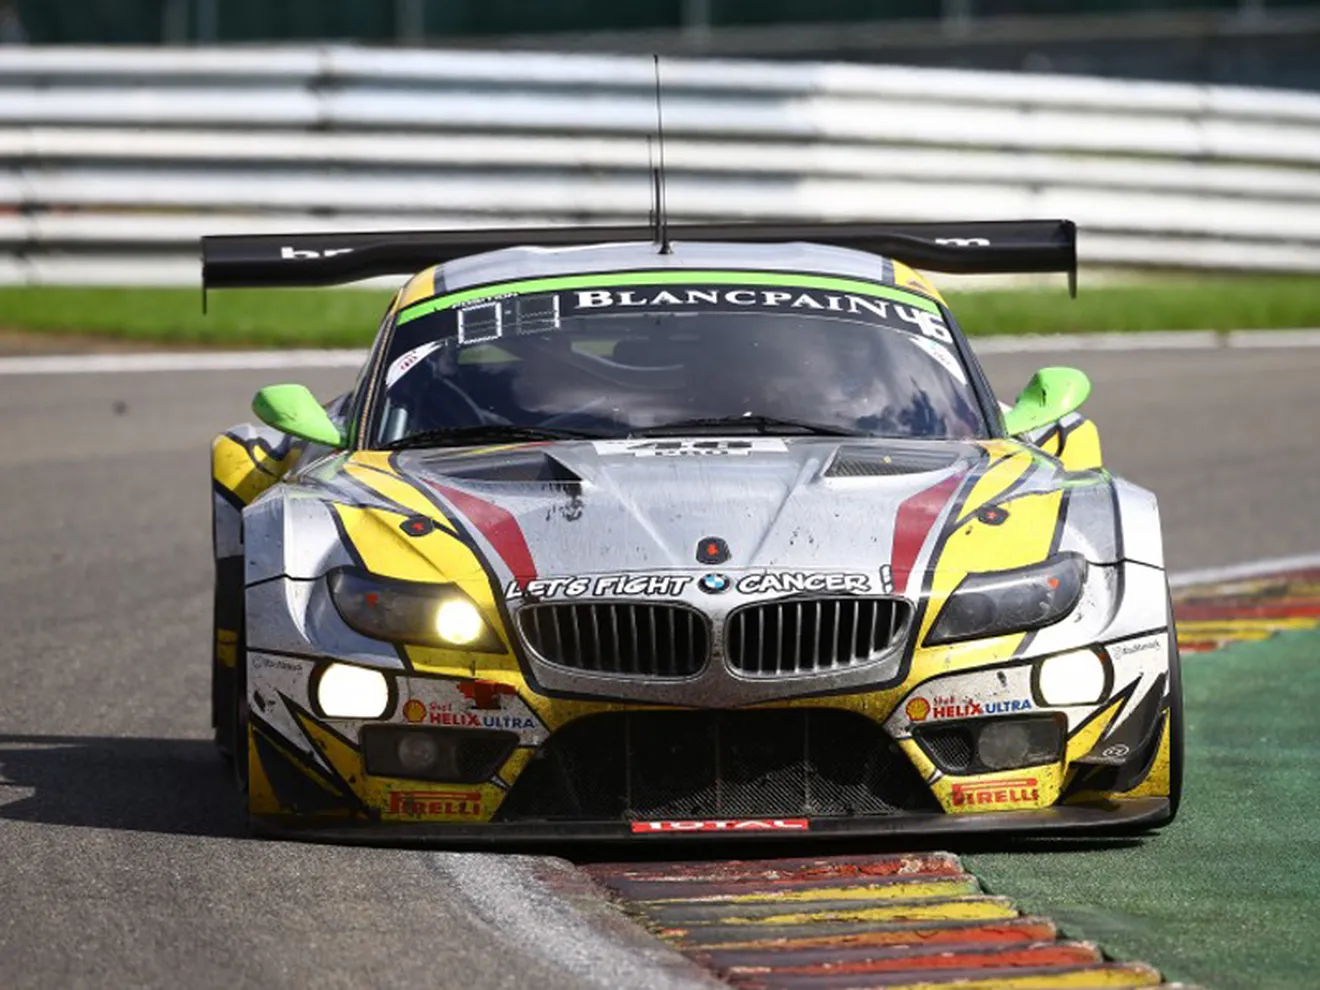 Marc VDS BMW gana las 24h de Spa 2015. Desastre español